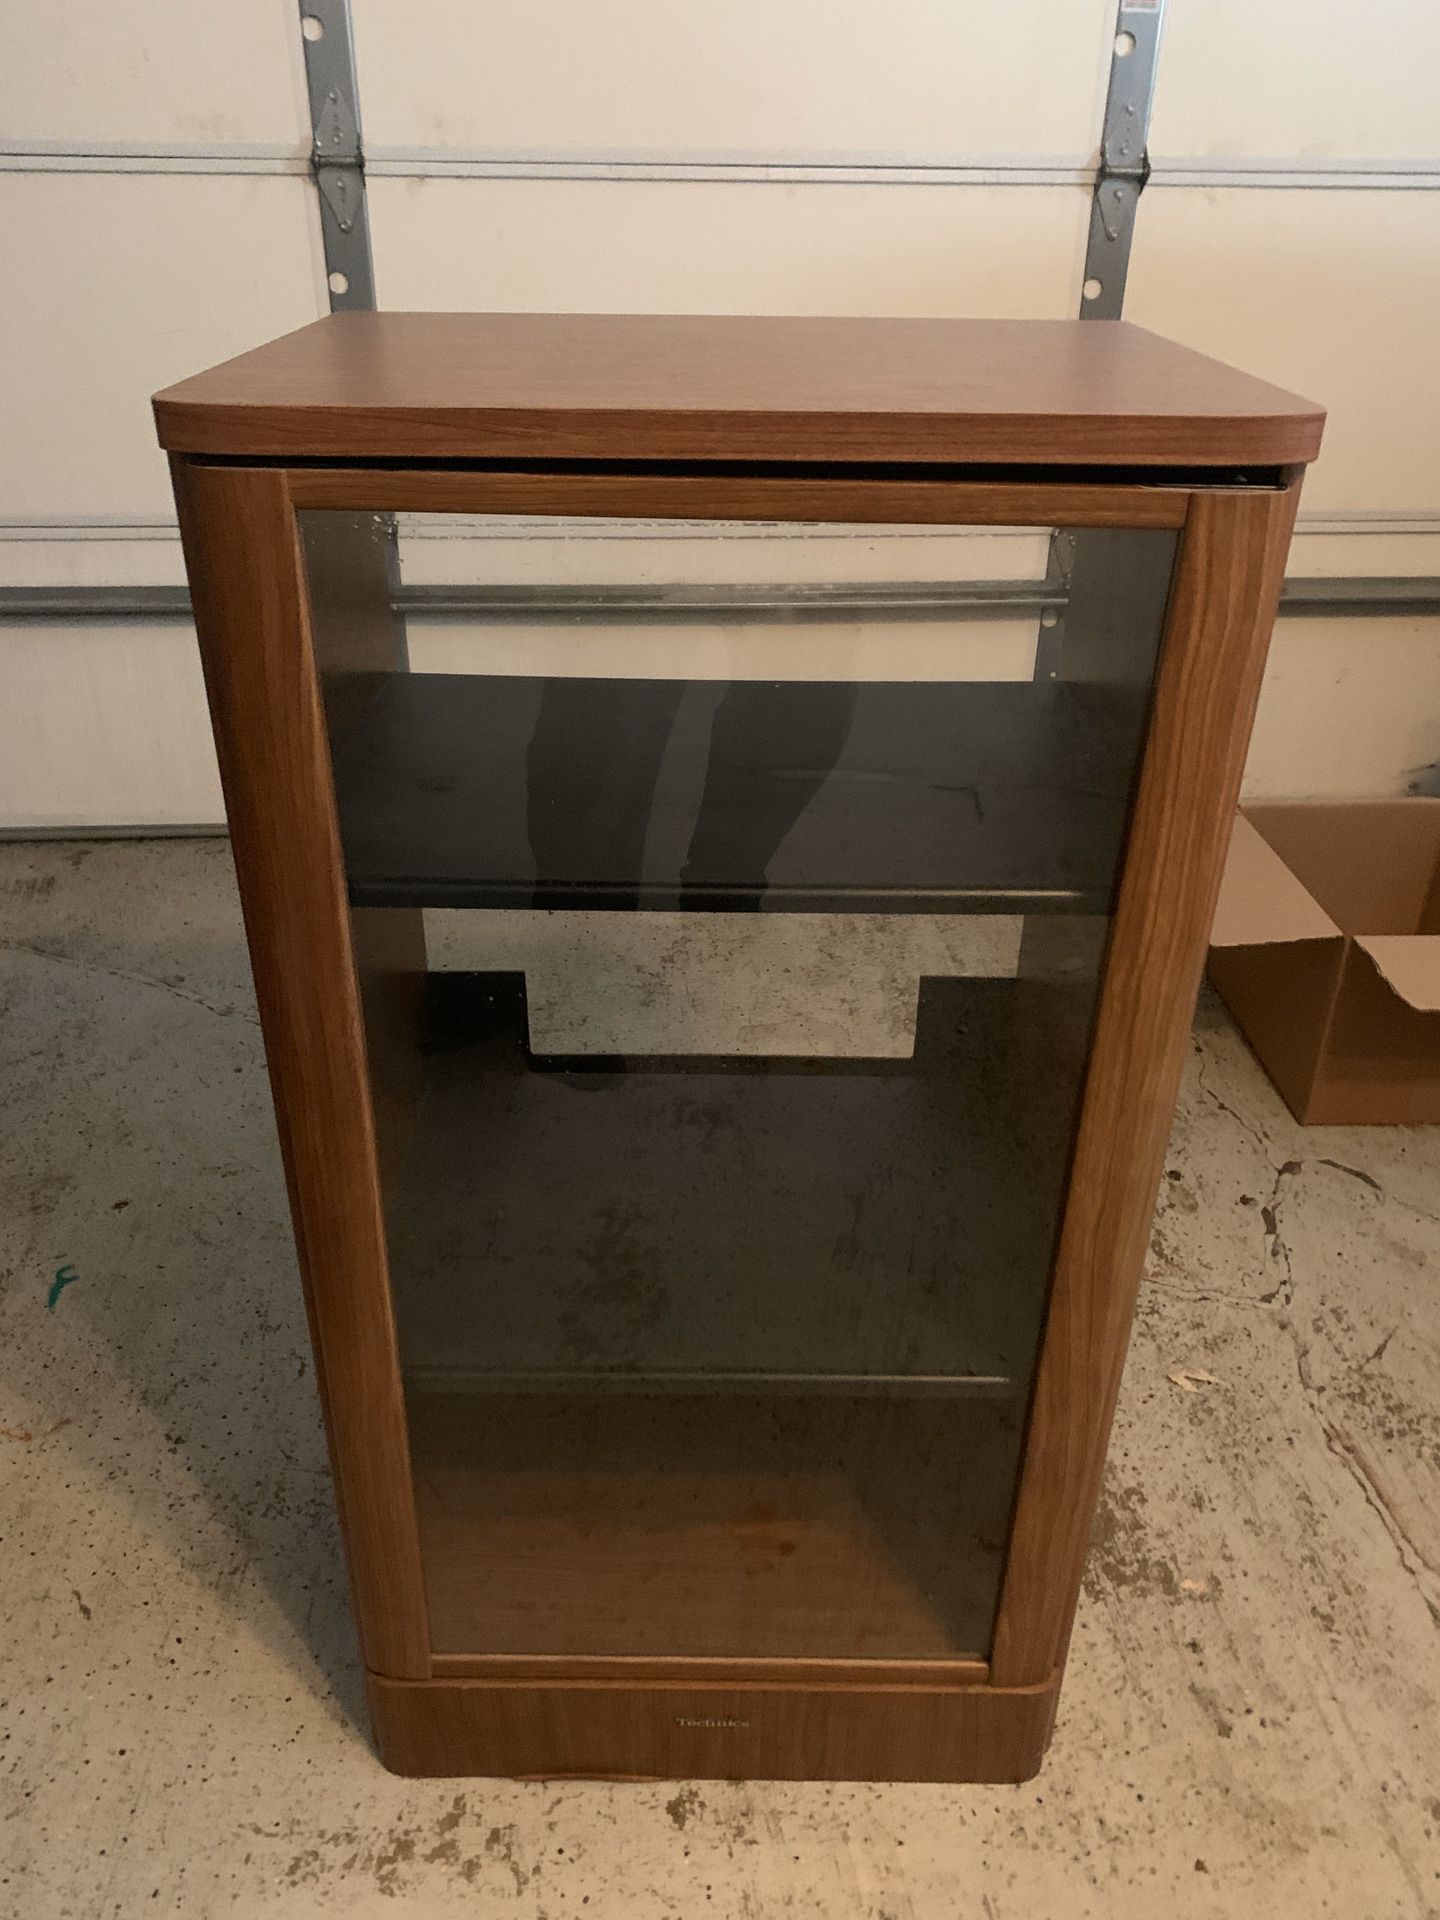 Technics stereo cabinet with glass door